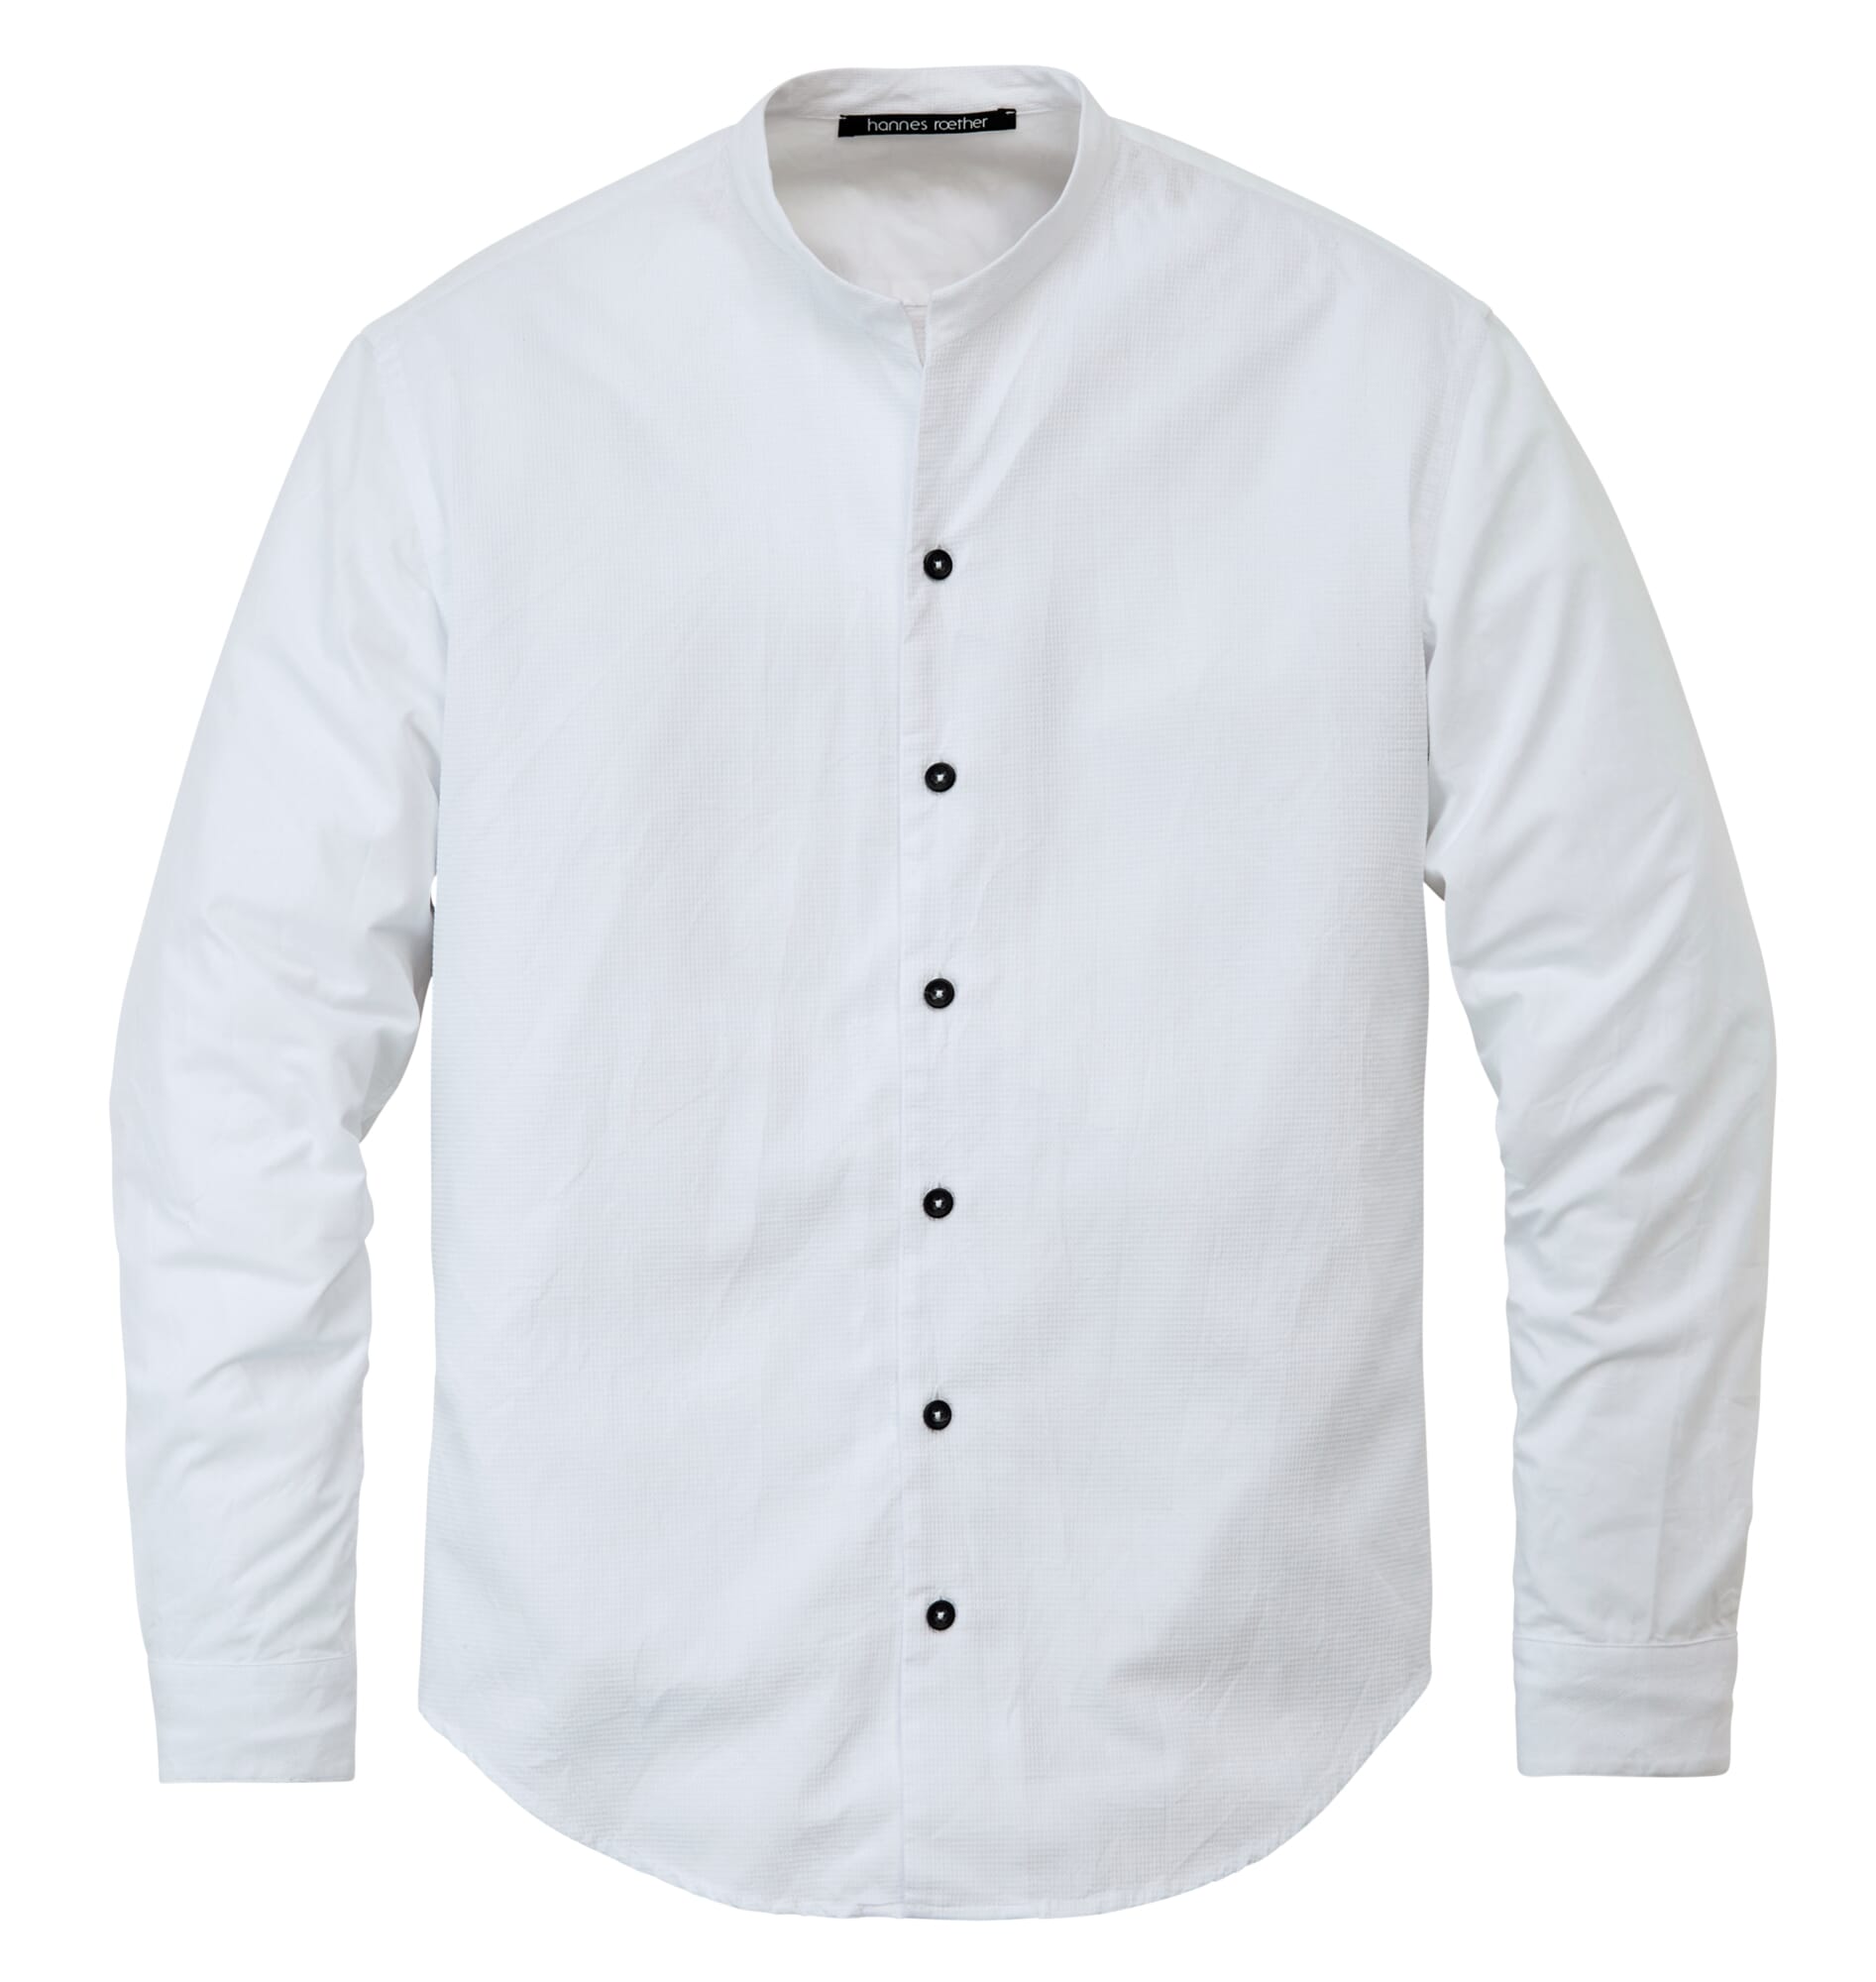 Mens shirt narrow collar, White